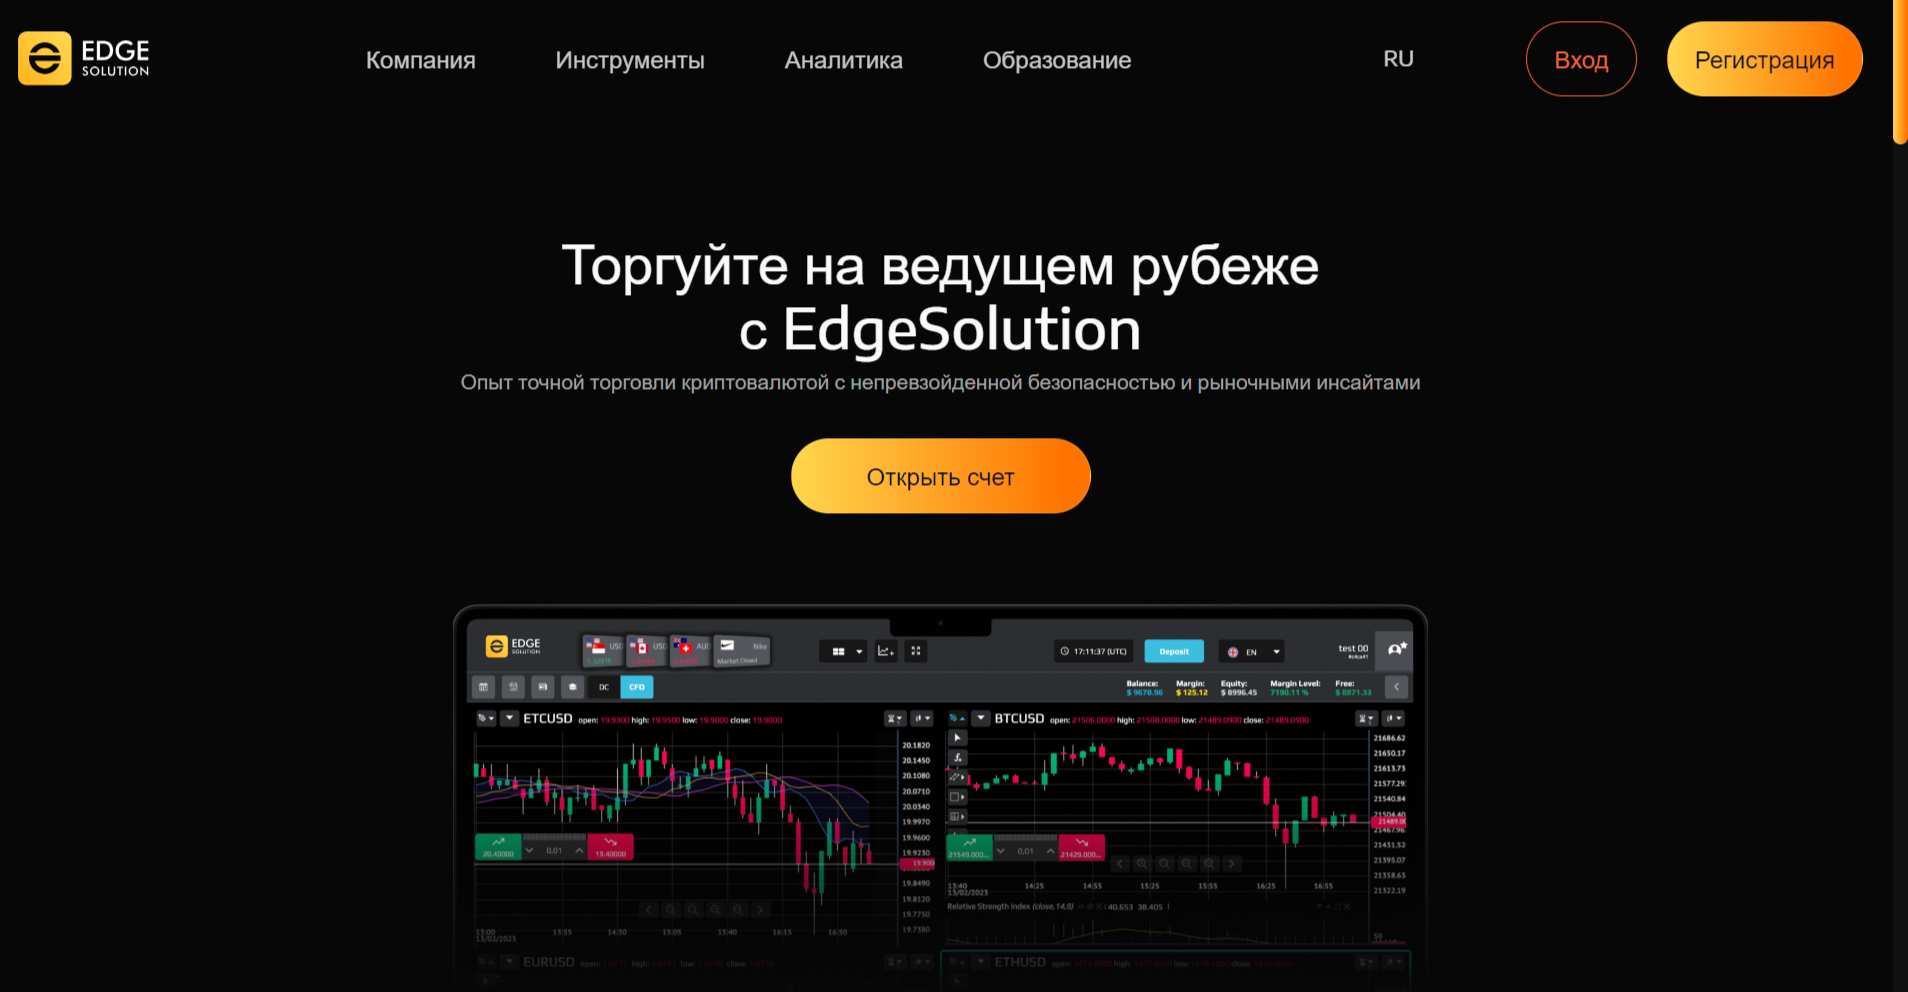 Edge Solution - официальный сайт